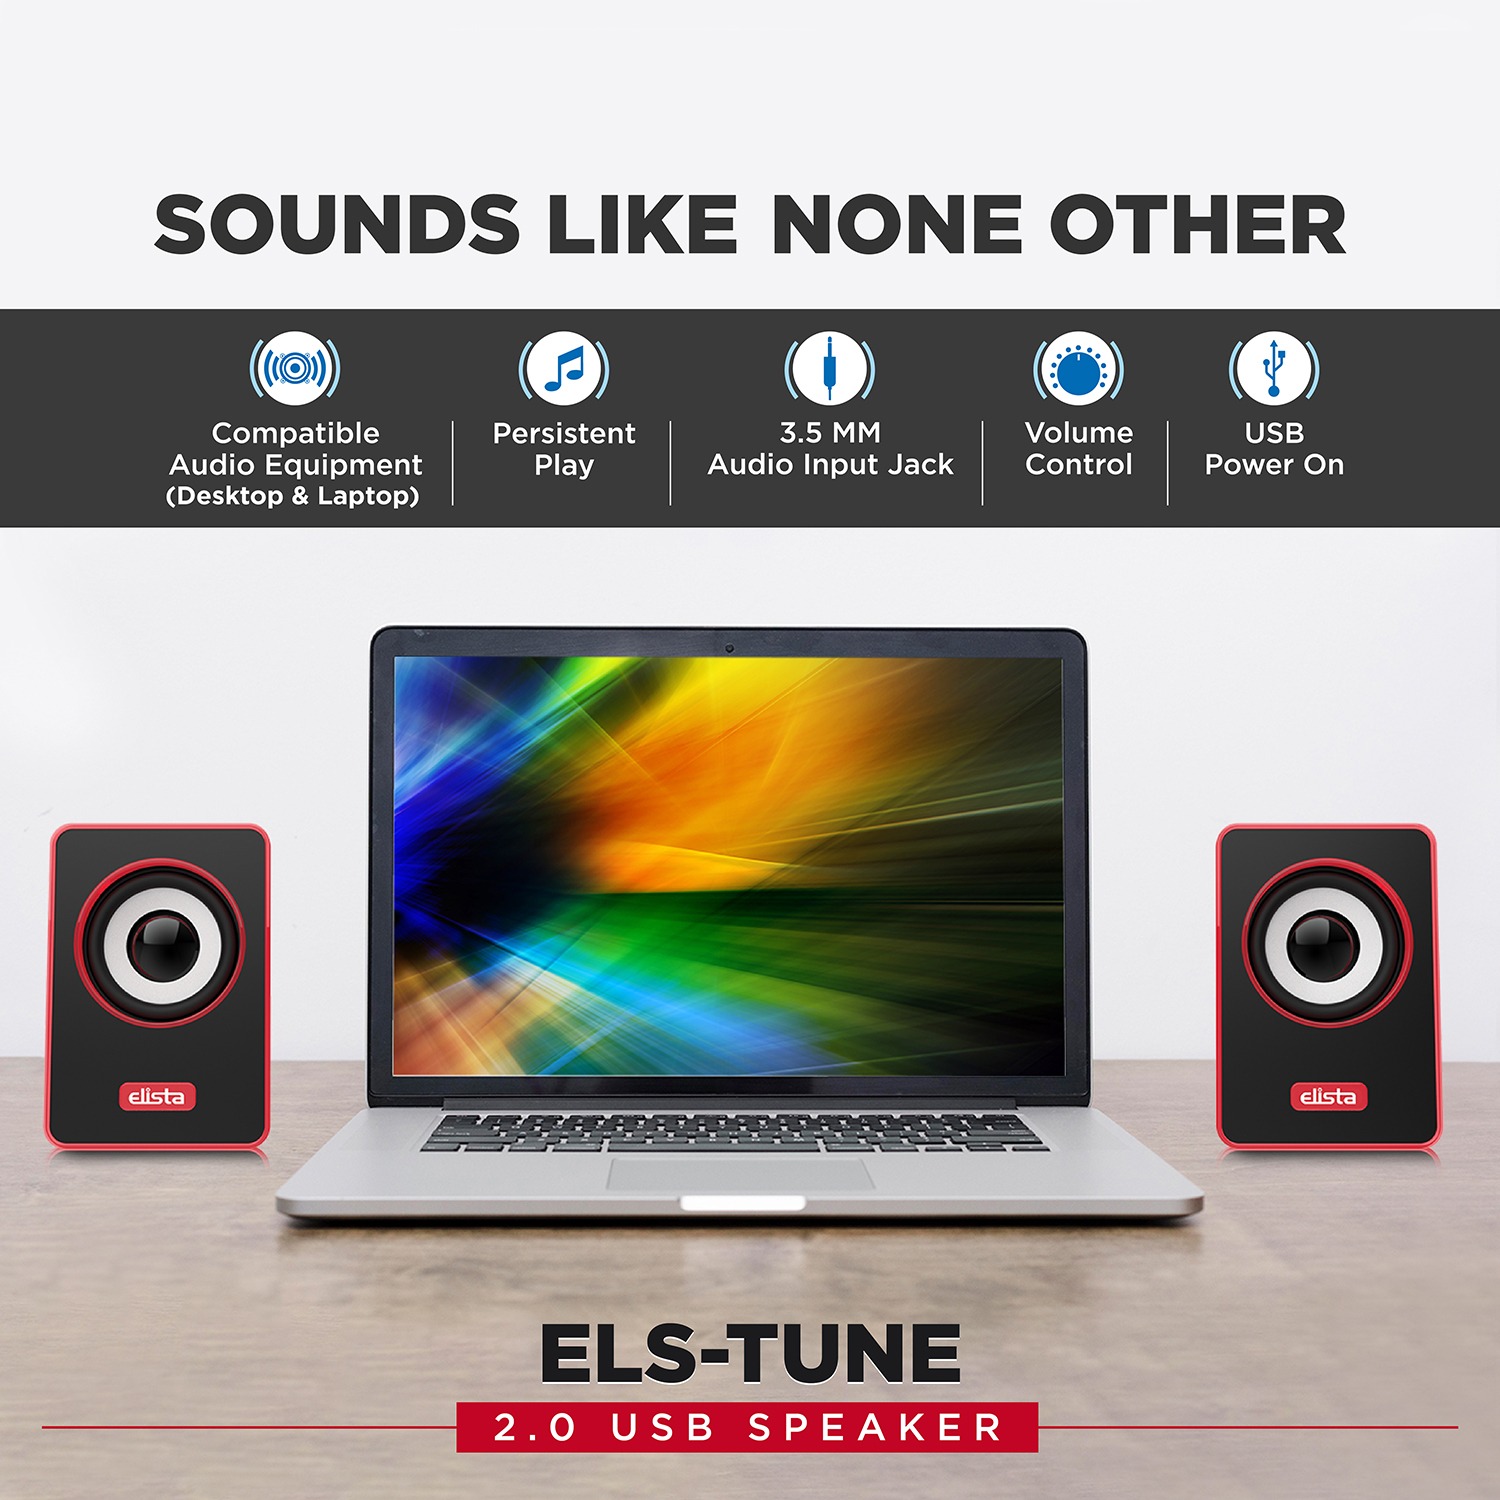 Elista 2.0 USB Speaker - ELS-TUNE